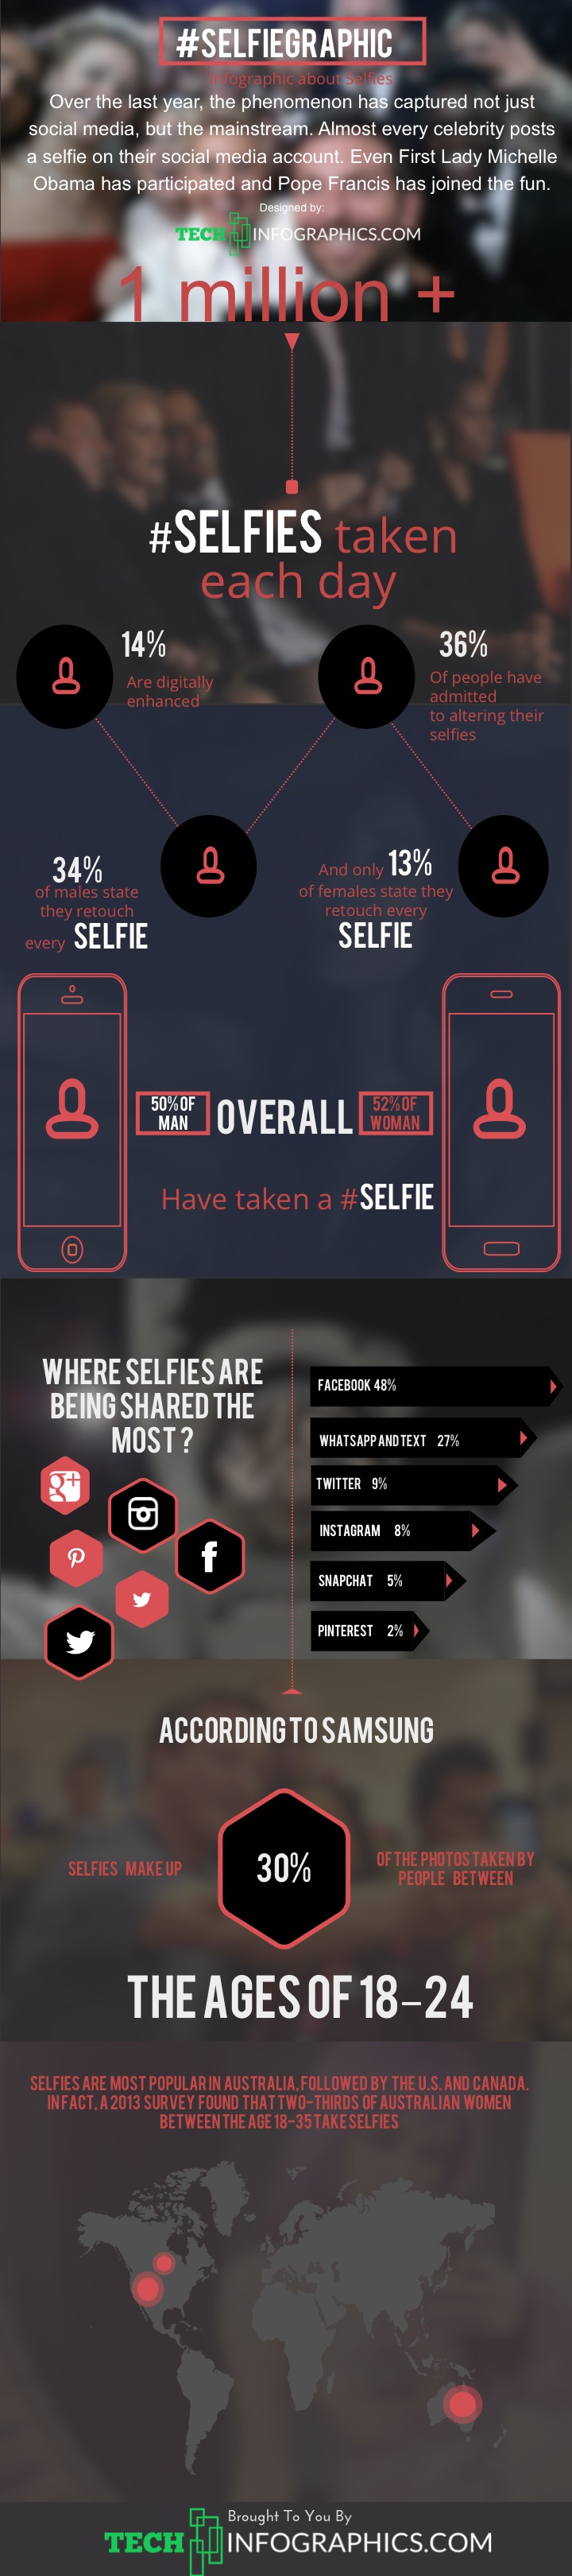 salfie-infographic-selfiegraphic